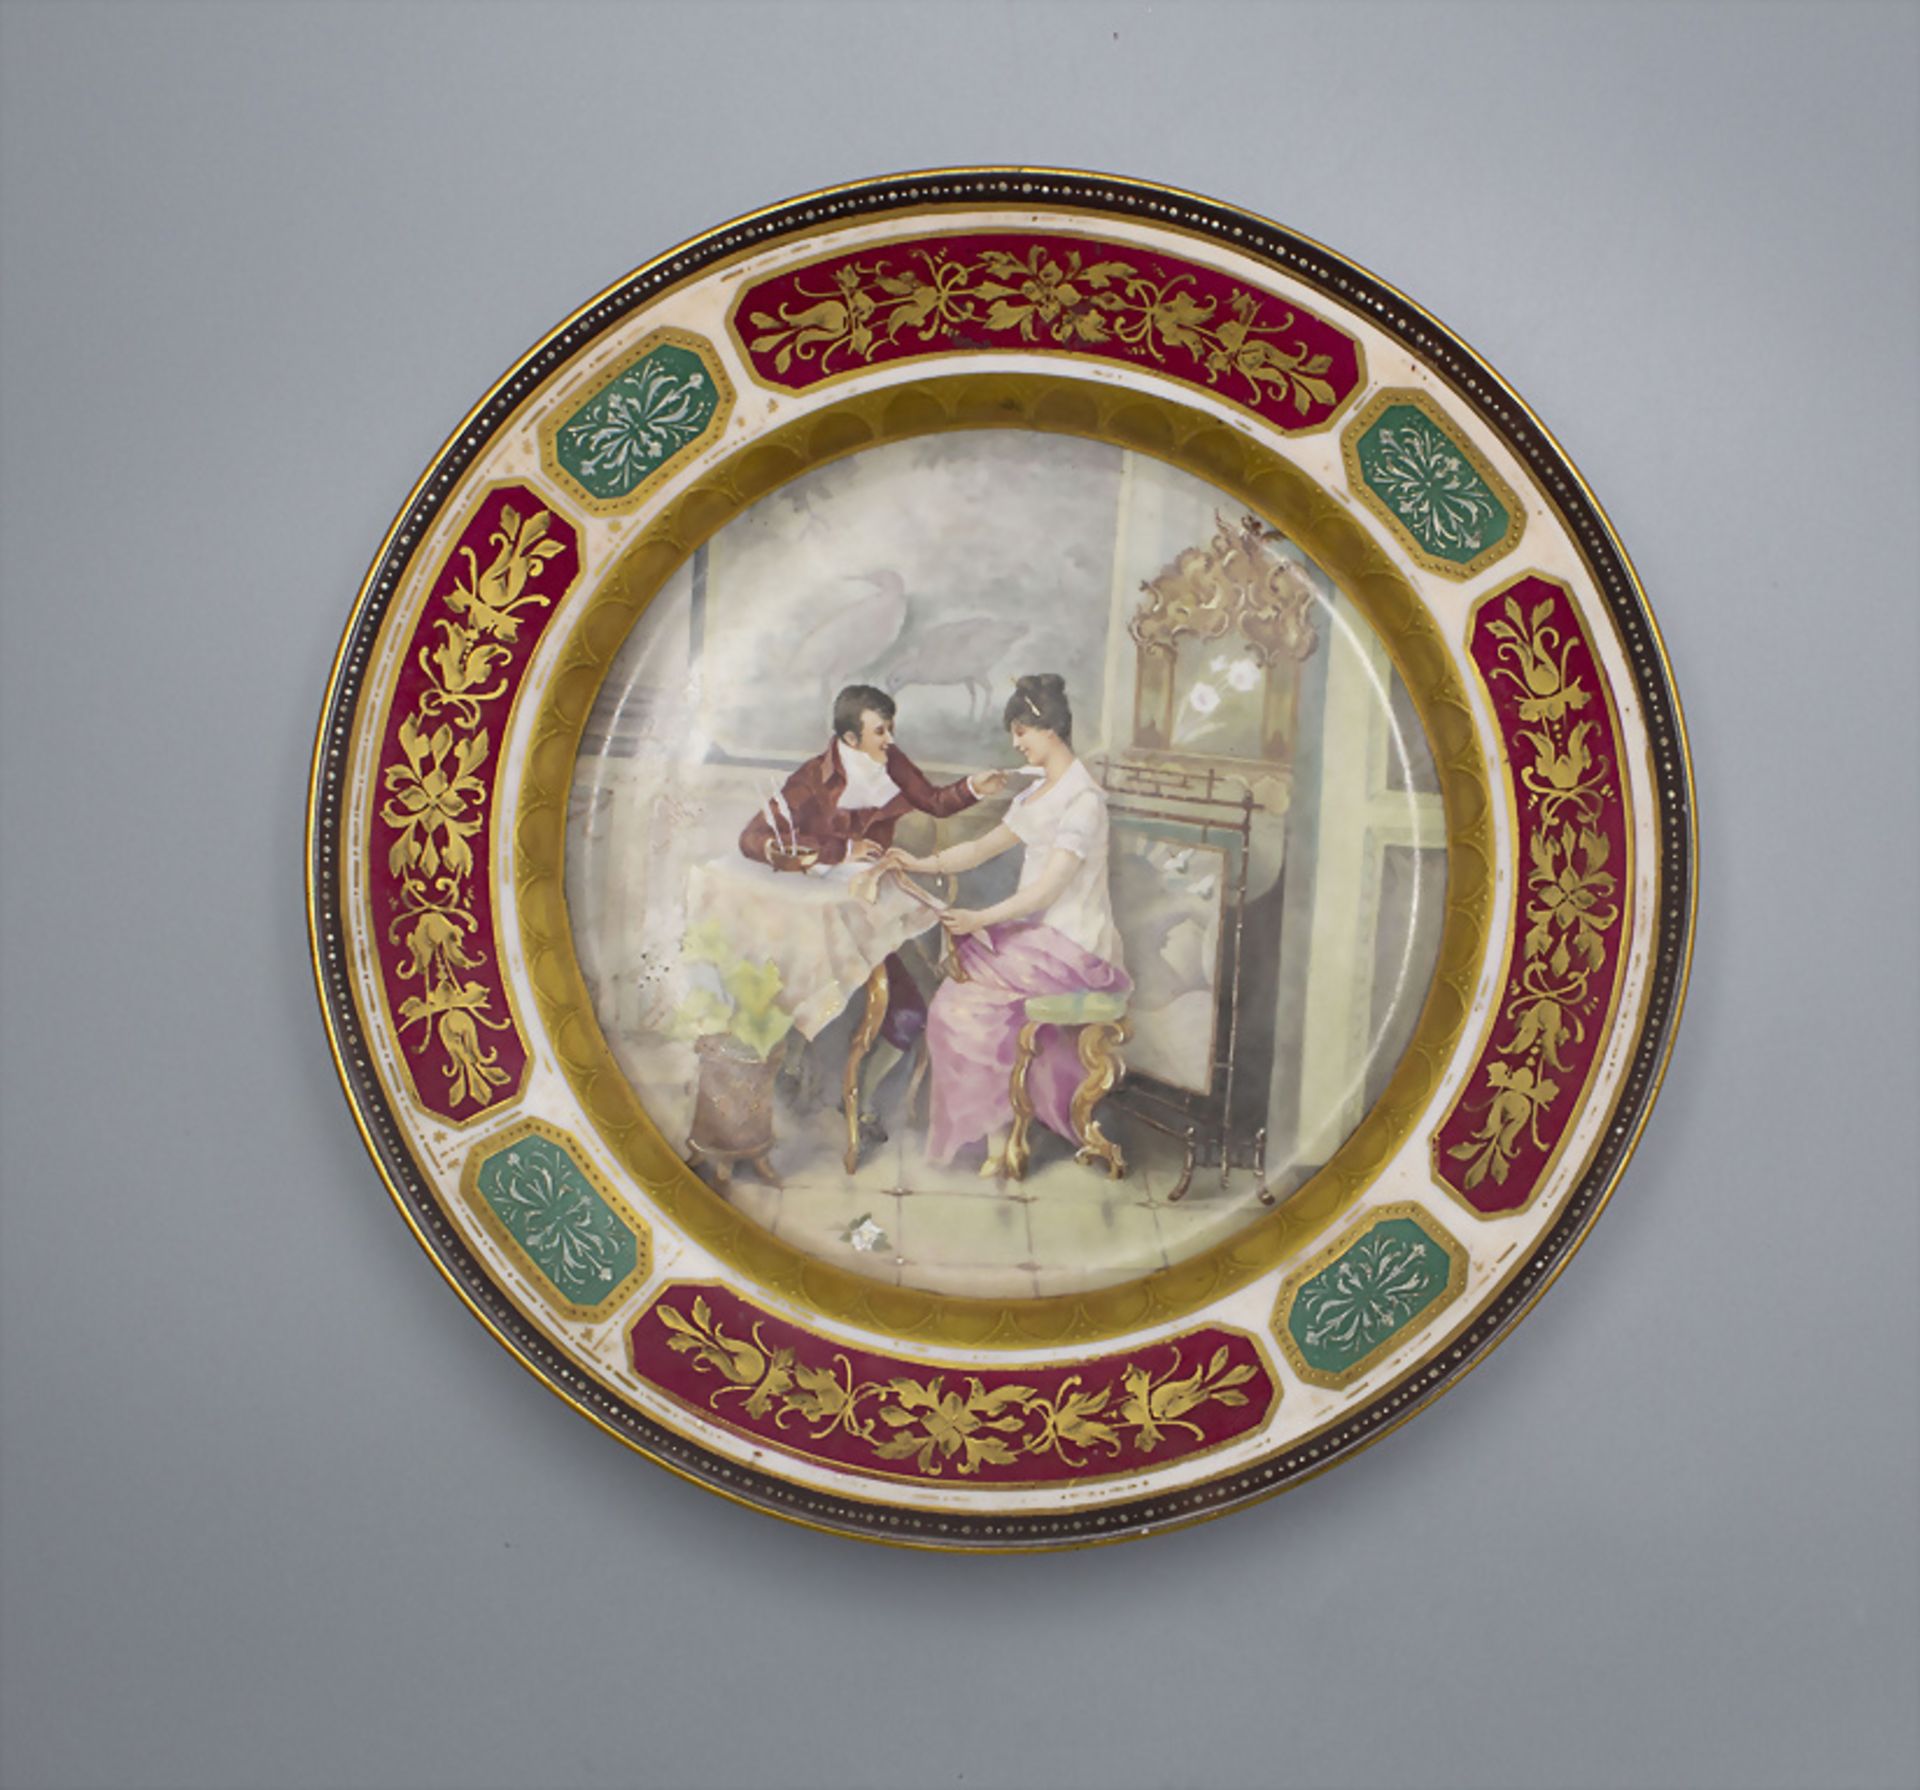 Klassizismus Teller 'Flitterwochen' / A plate depicting a honey moon, nach Sorgenthal, 19. Jh.